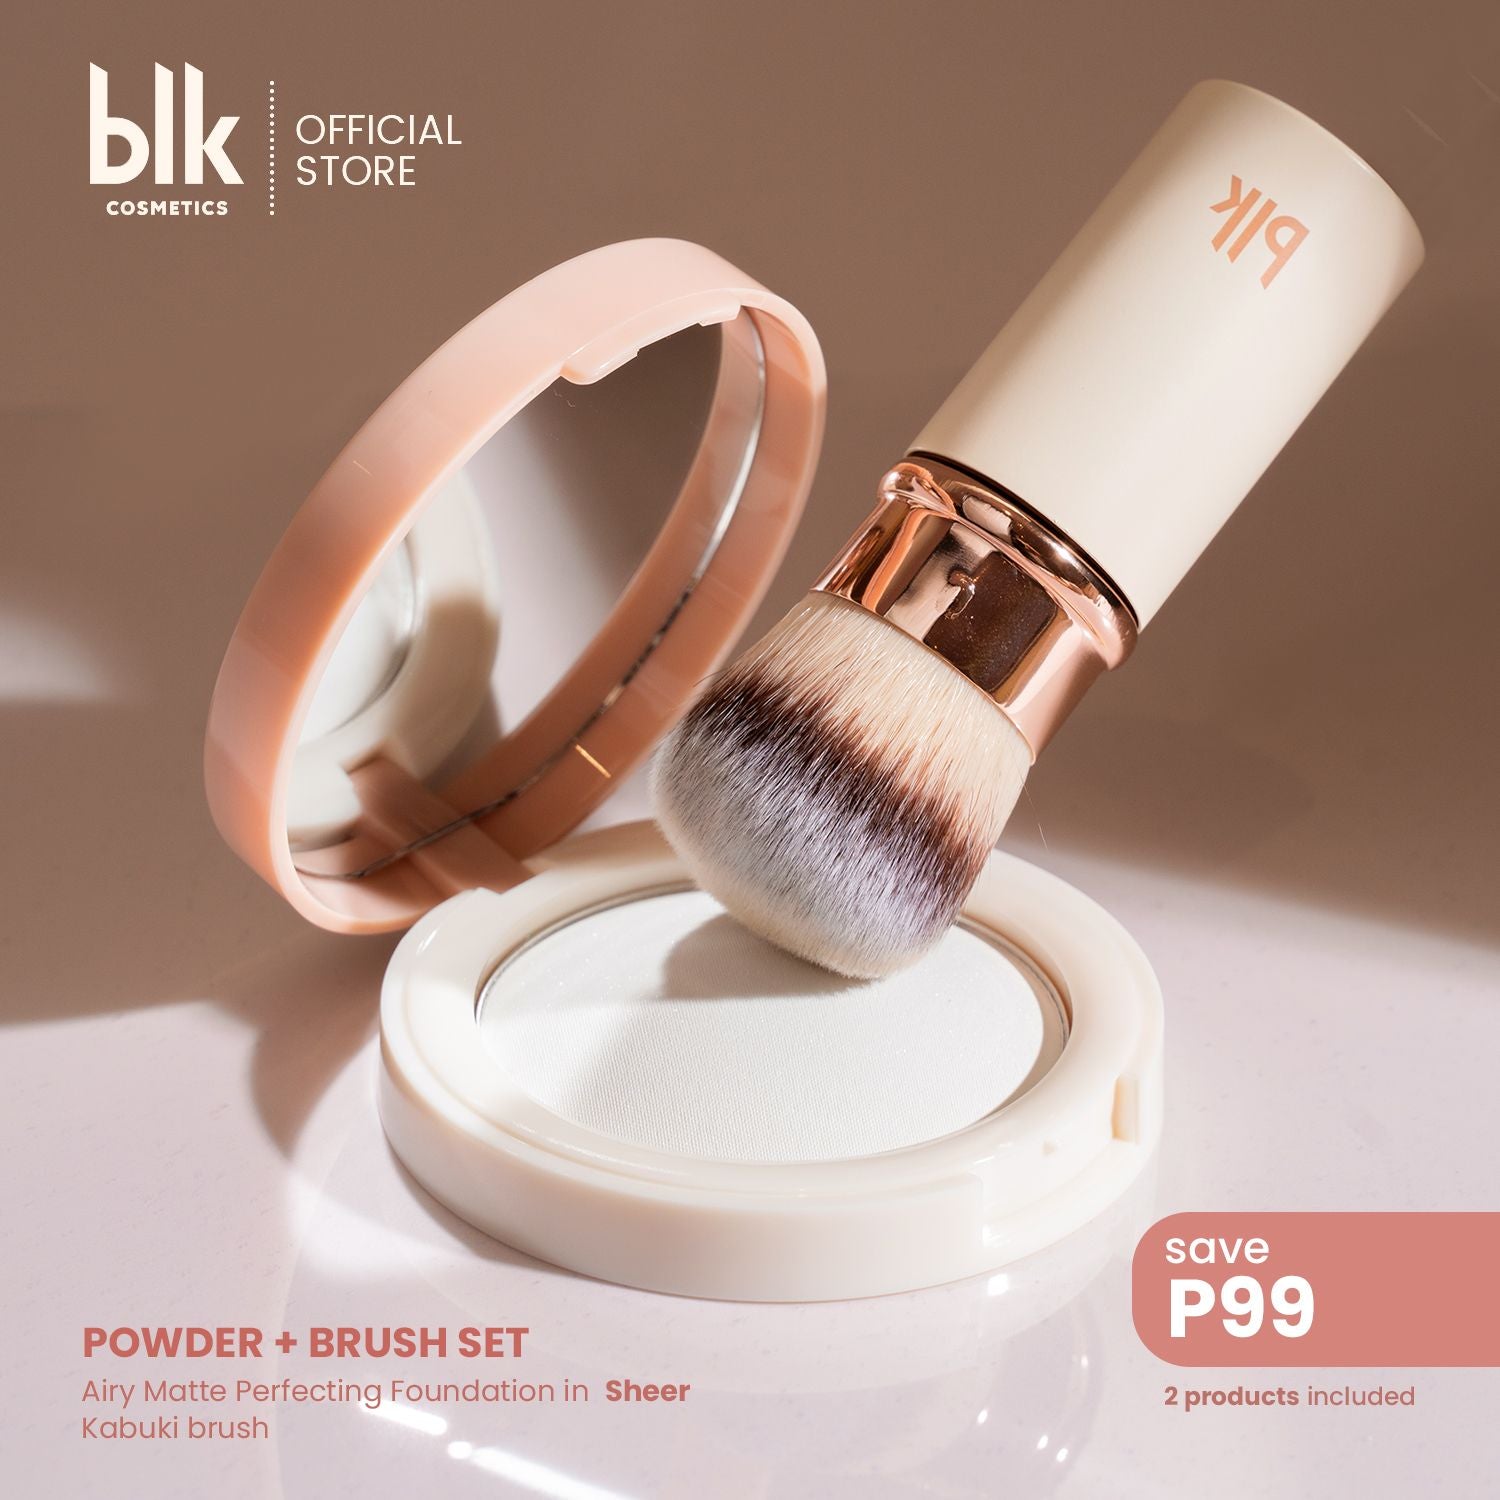 blk cosmetics daydream airy matte perfecting powder foundation SPF 20 + brush